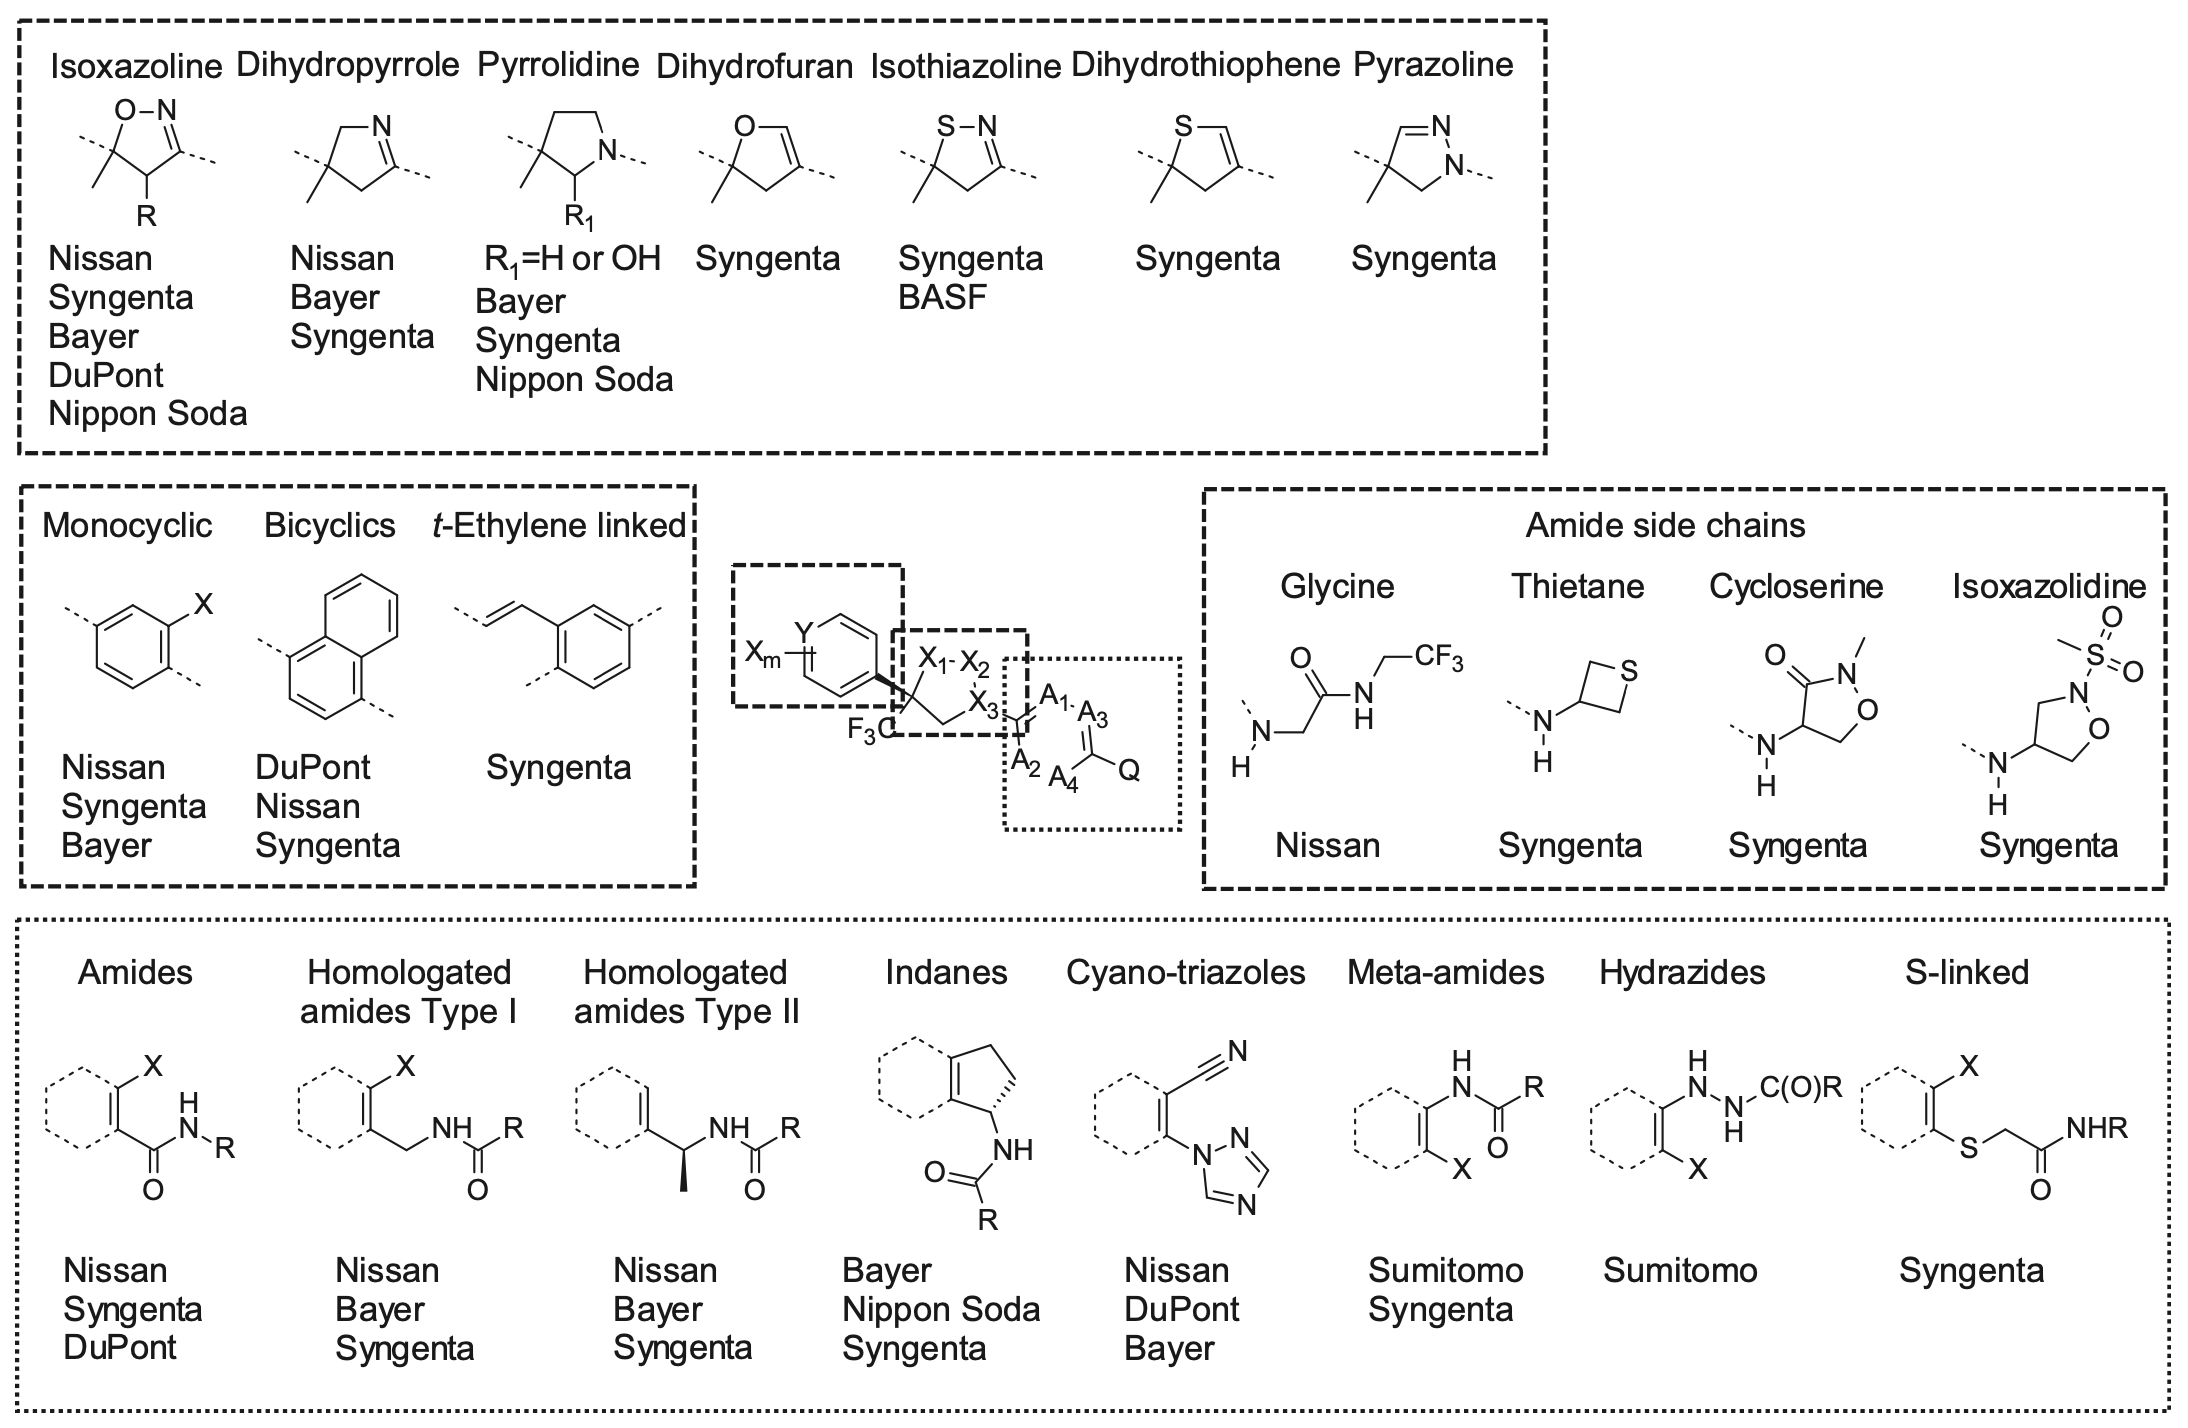 The isoxazoline bioactive chemical classes landscape - https://doi.org/10.1016/B978-0-12-821035-2.00008-5